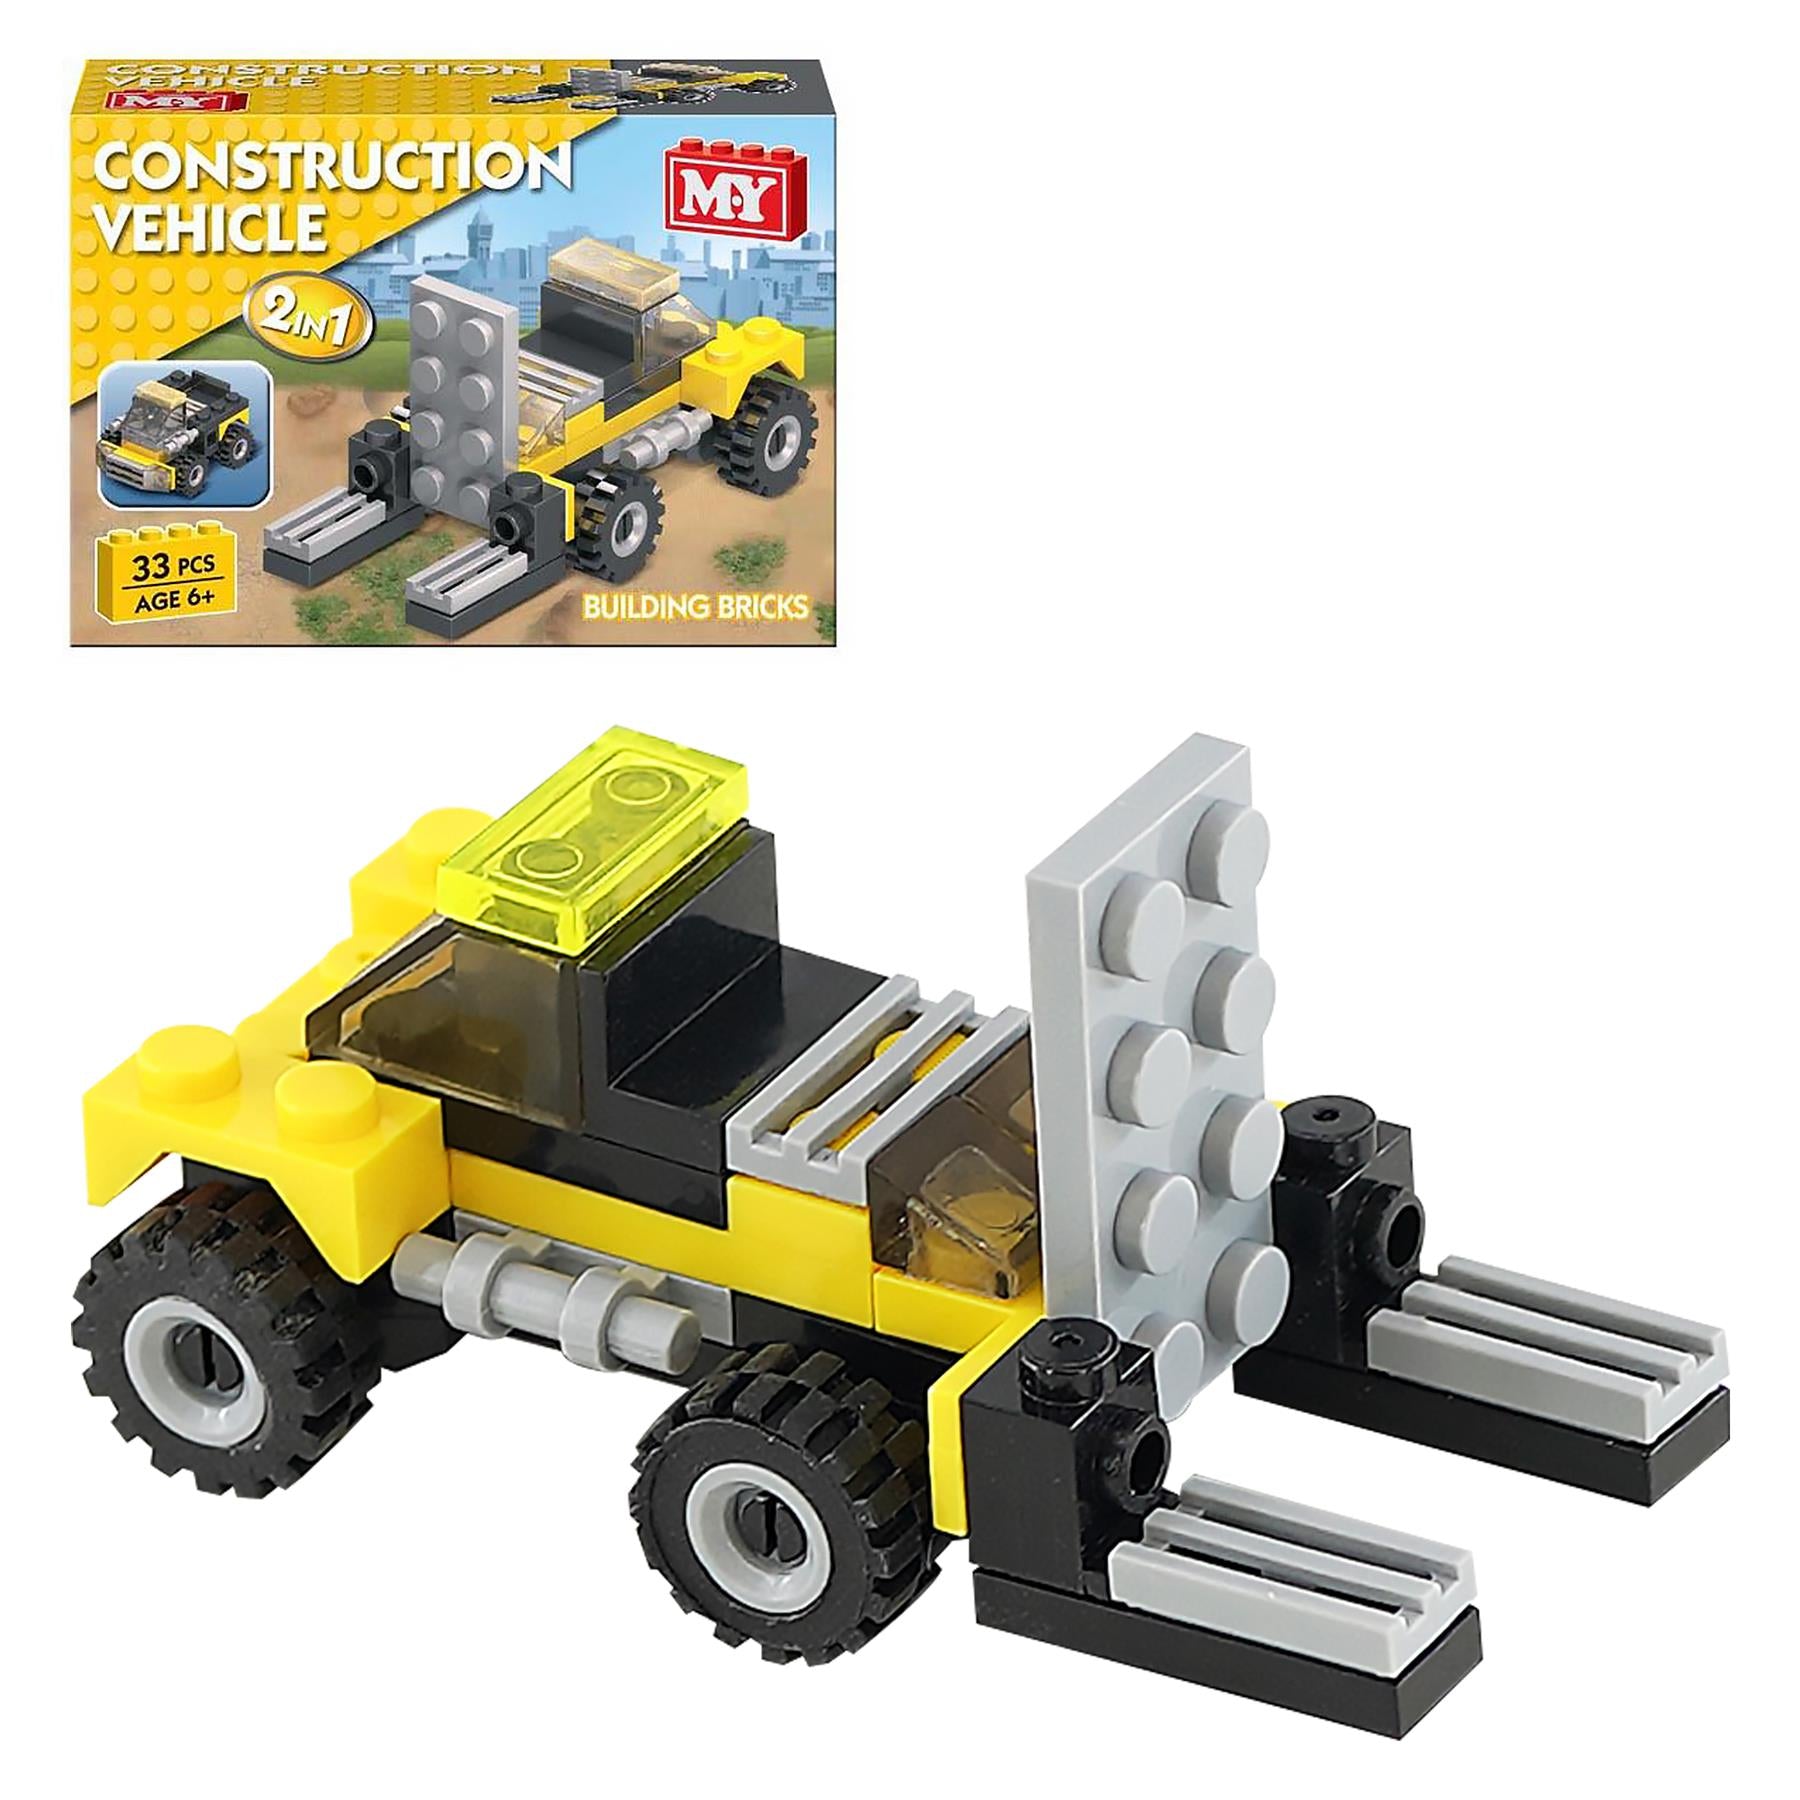 The Magic Toy Shop Building Bricks Construction Vehicles Building Bricks 2 in 1